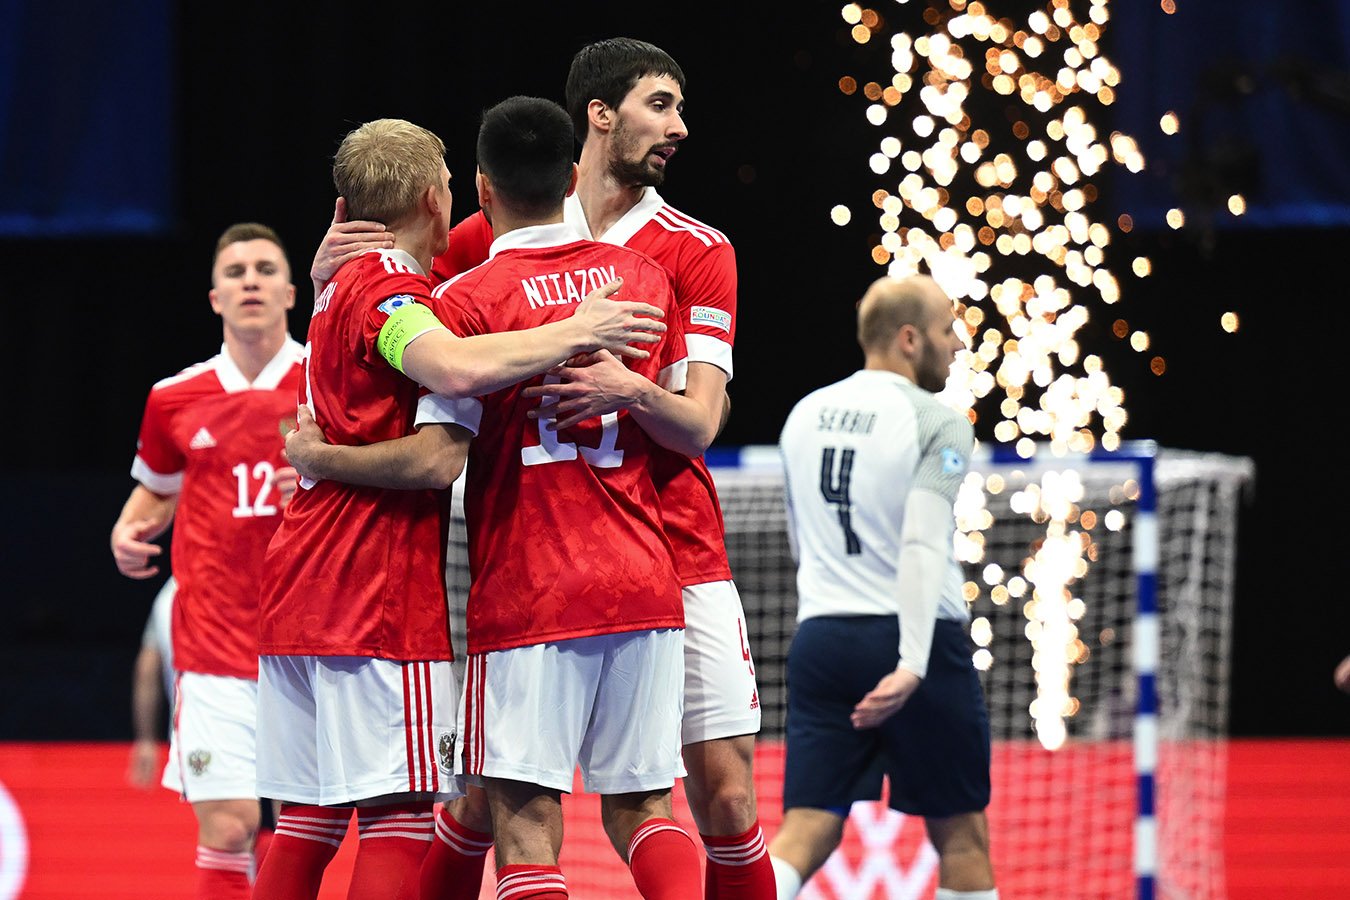 Сборная России по мини-футболу начала Евро с разгрома. Словаки получили аж семь мячей!